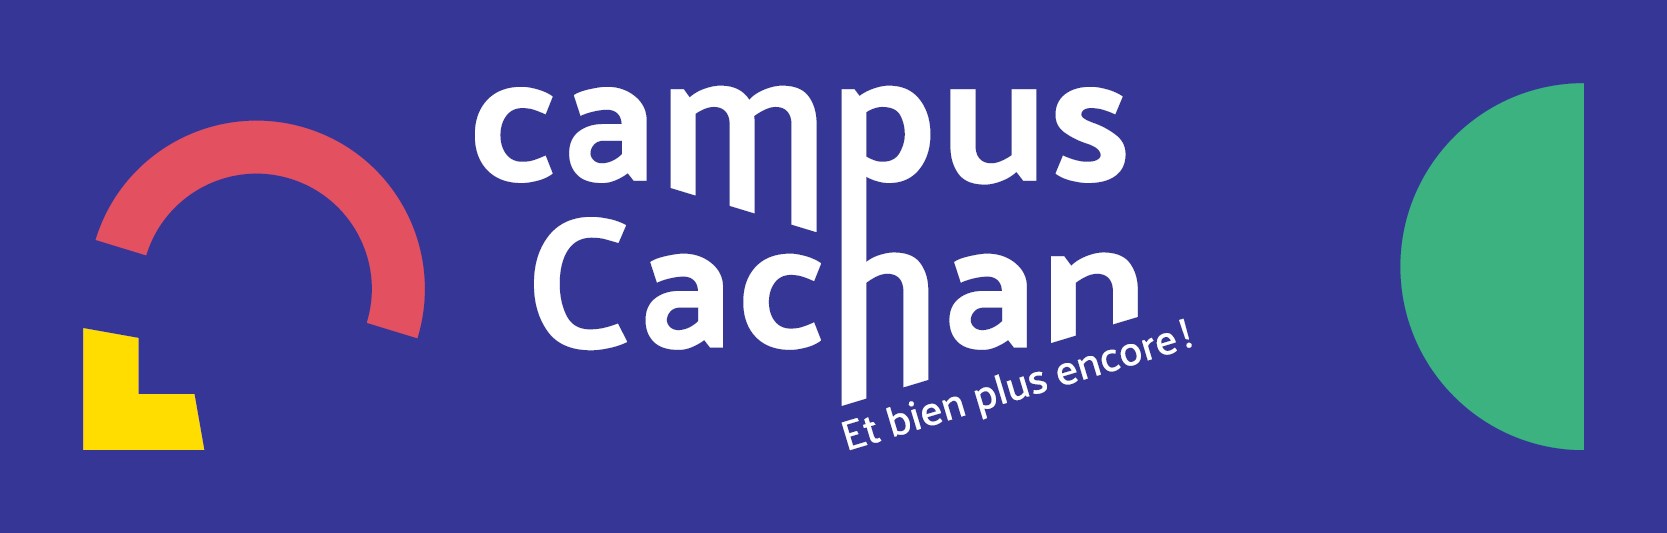 Campus Cachan